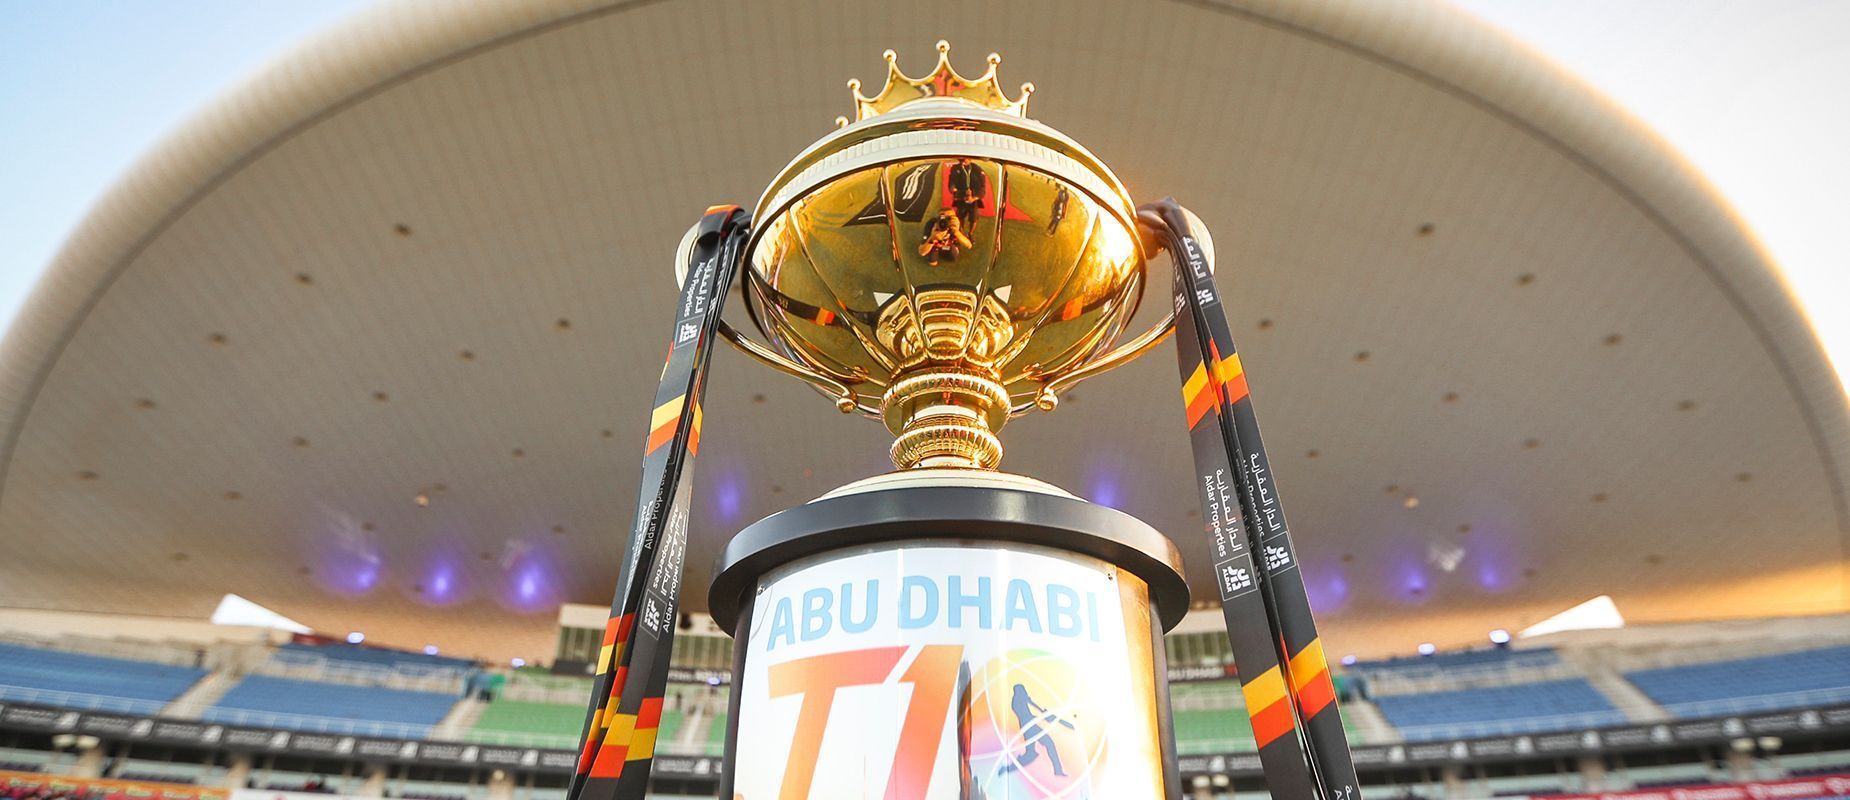 Abu Dhabi T10 2021/22: Full schedule, squads, match timings